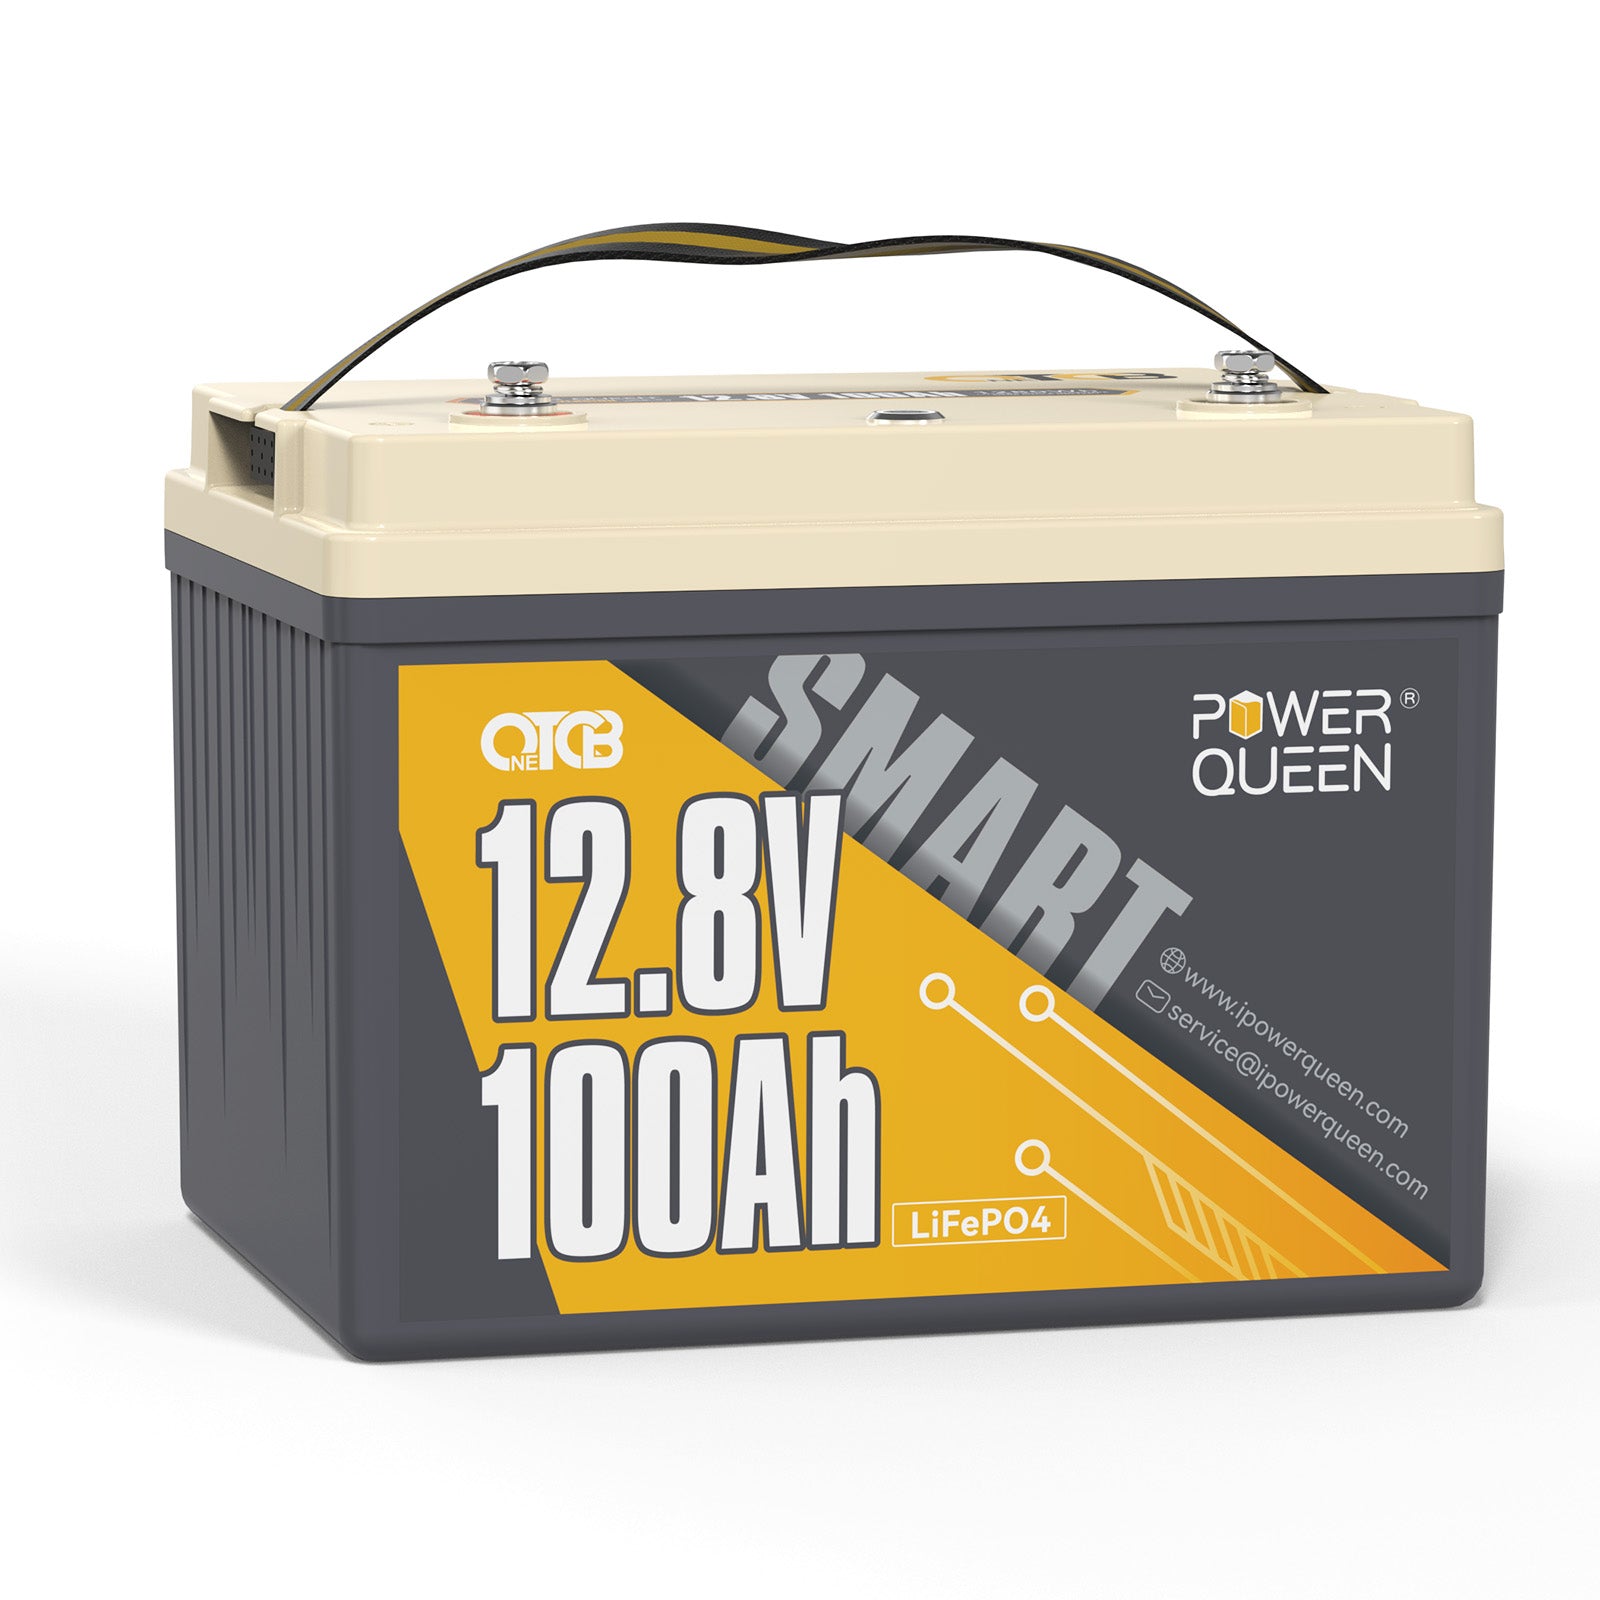 【TVA 0%】 Batterie Power Queen 12V 100Ah basse température OTCB LiFePO4 avec BMS 100A intégré